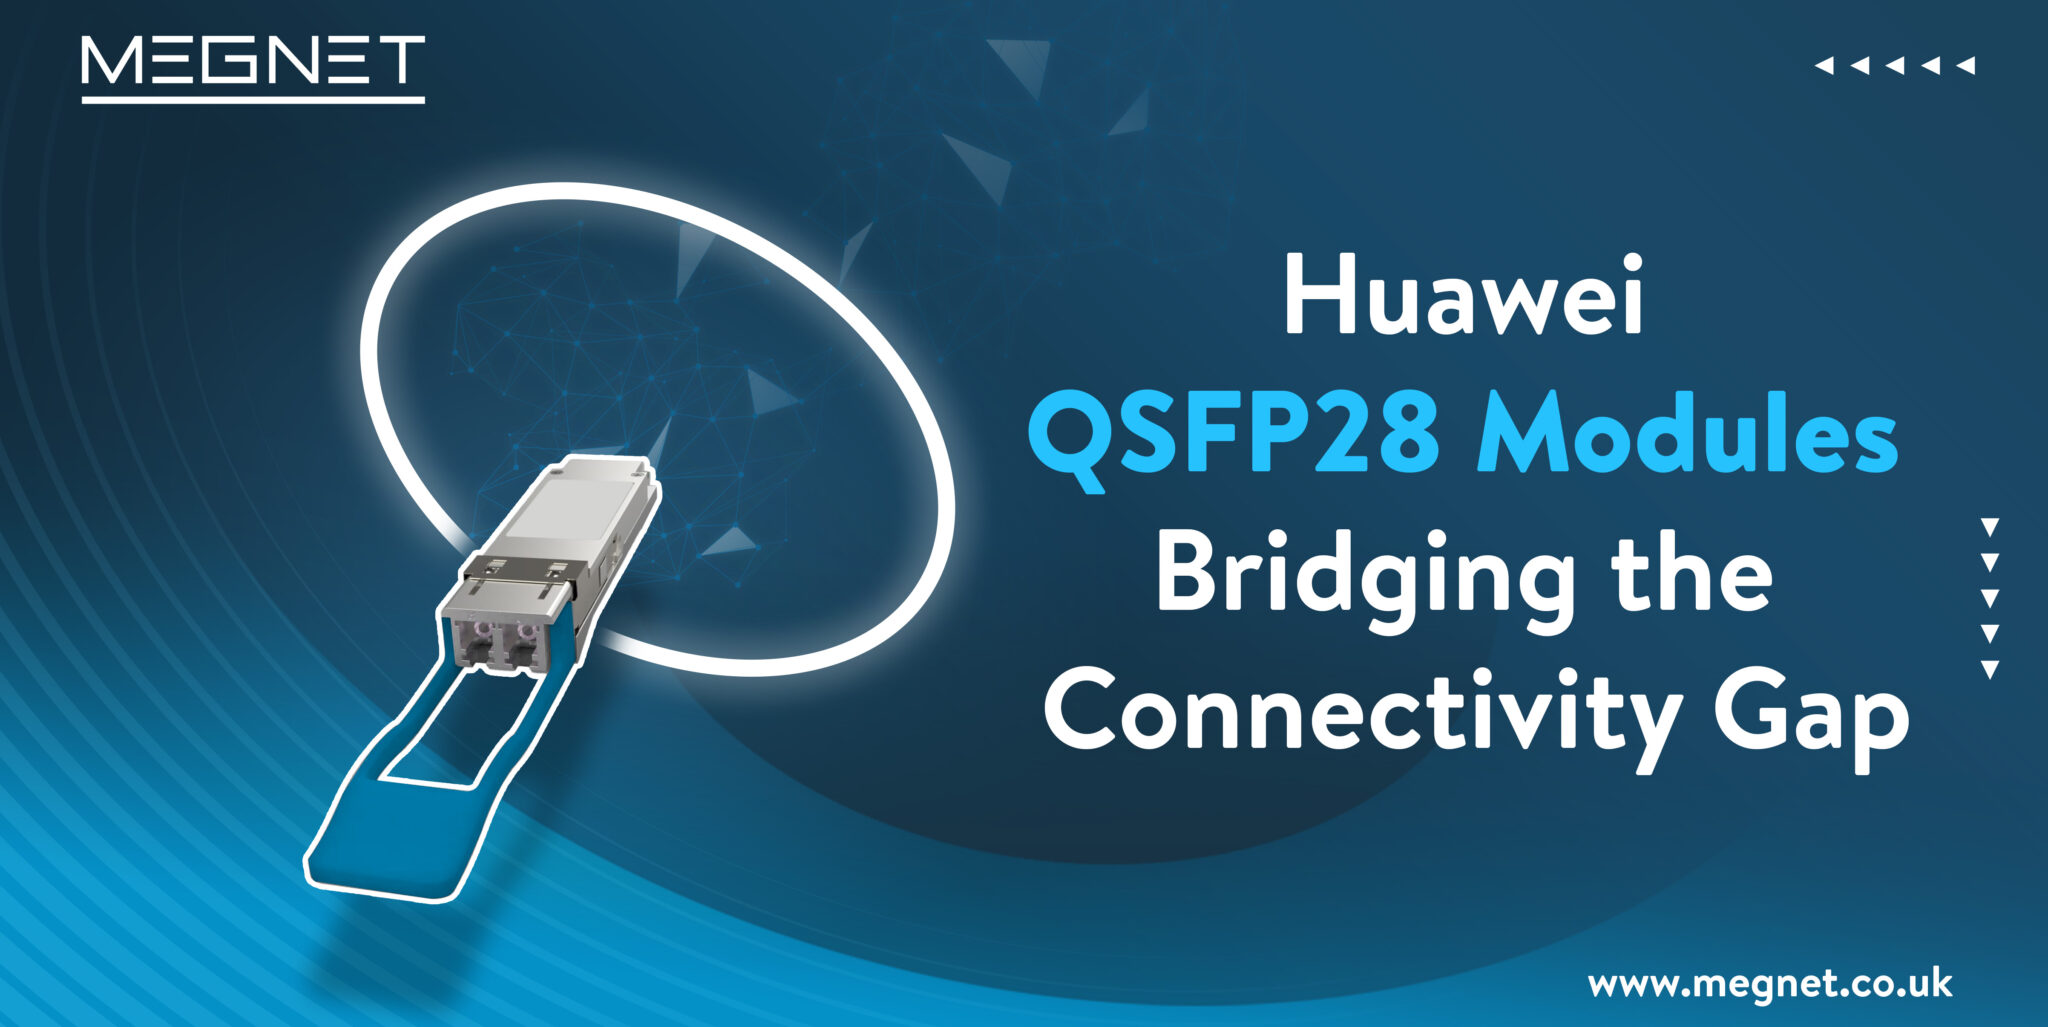 Huawei QSFP28